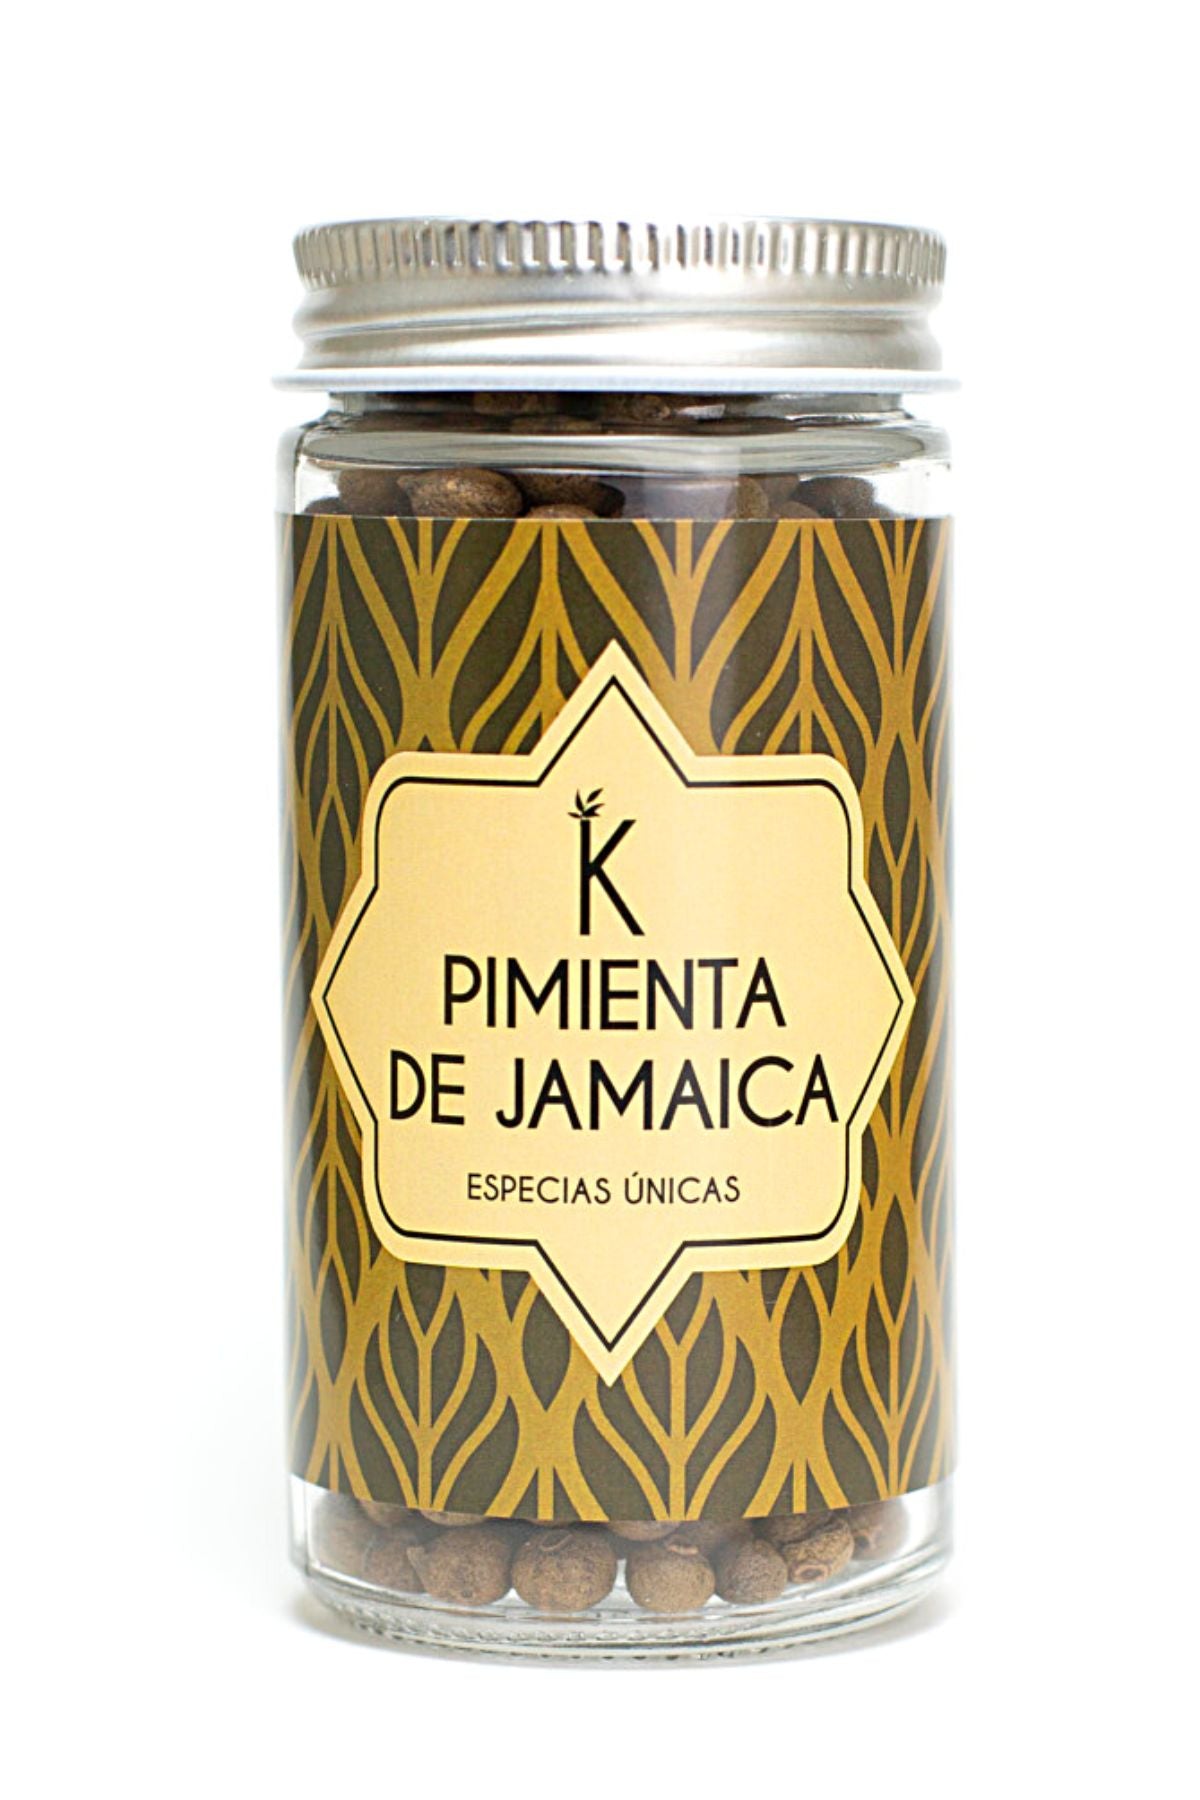 Pimienta de Jamaica - Especia ñunica